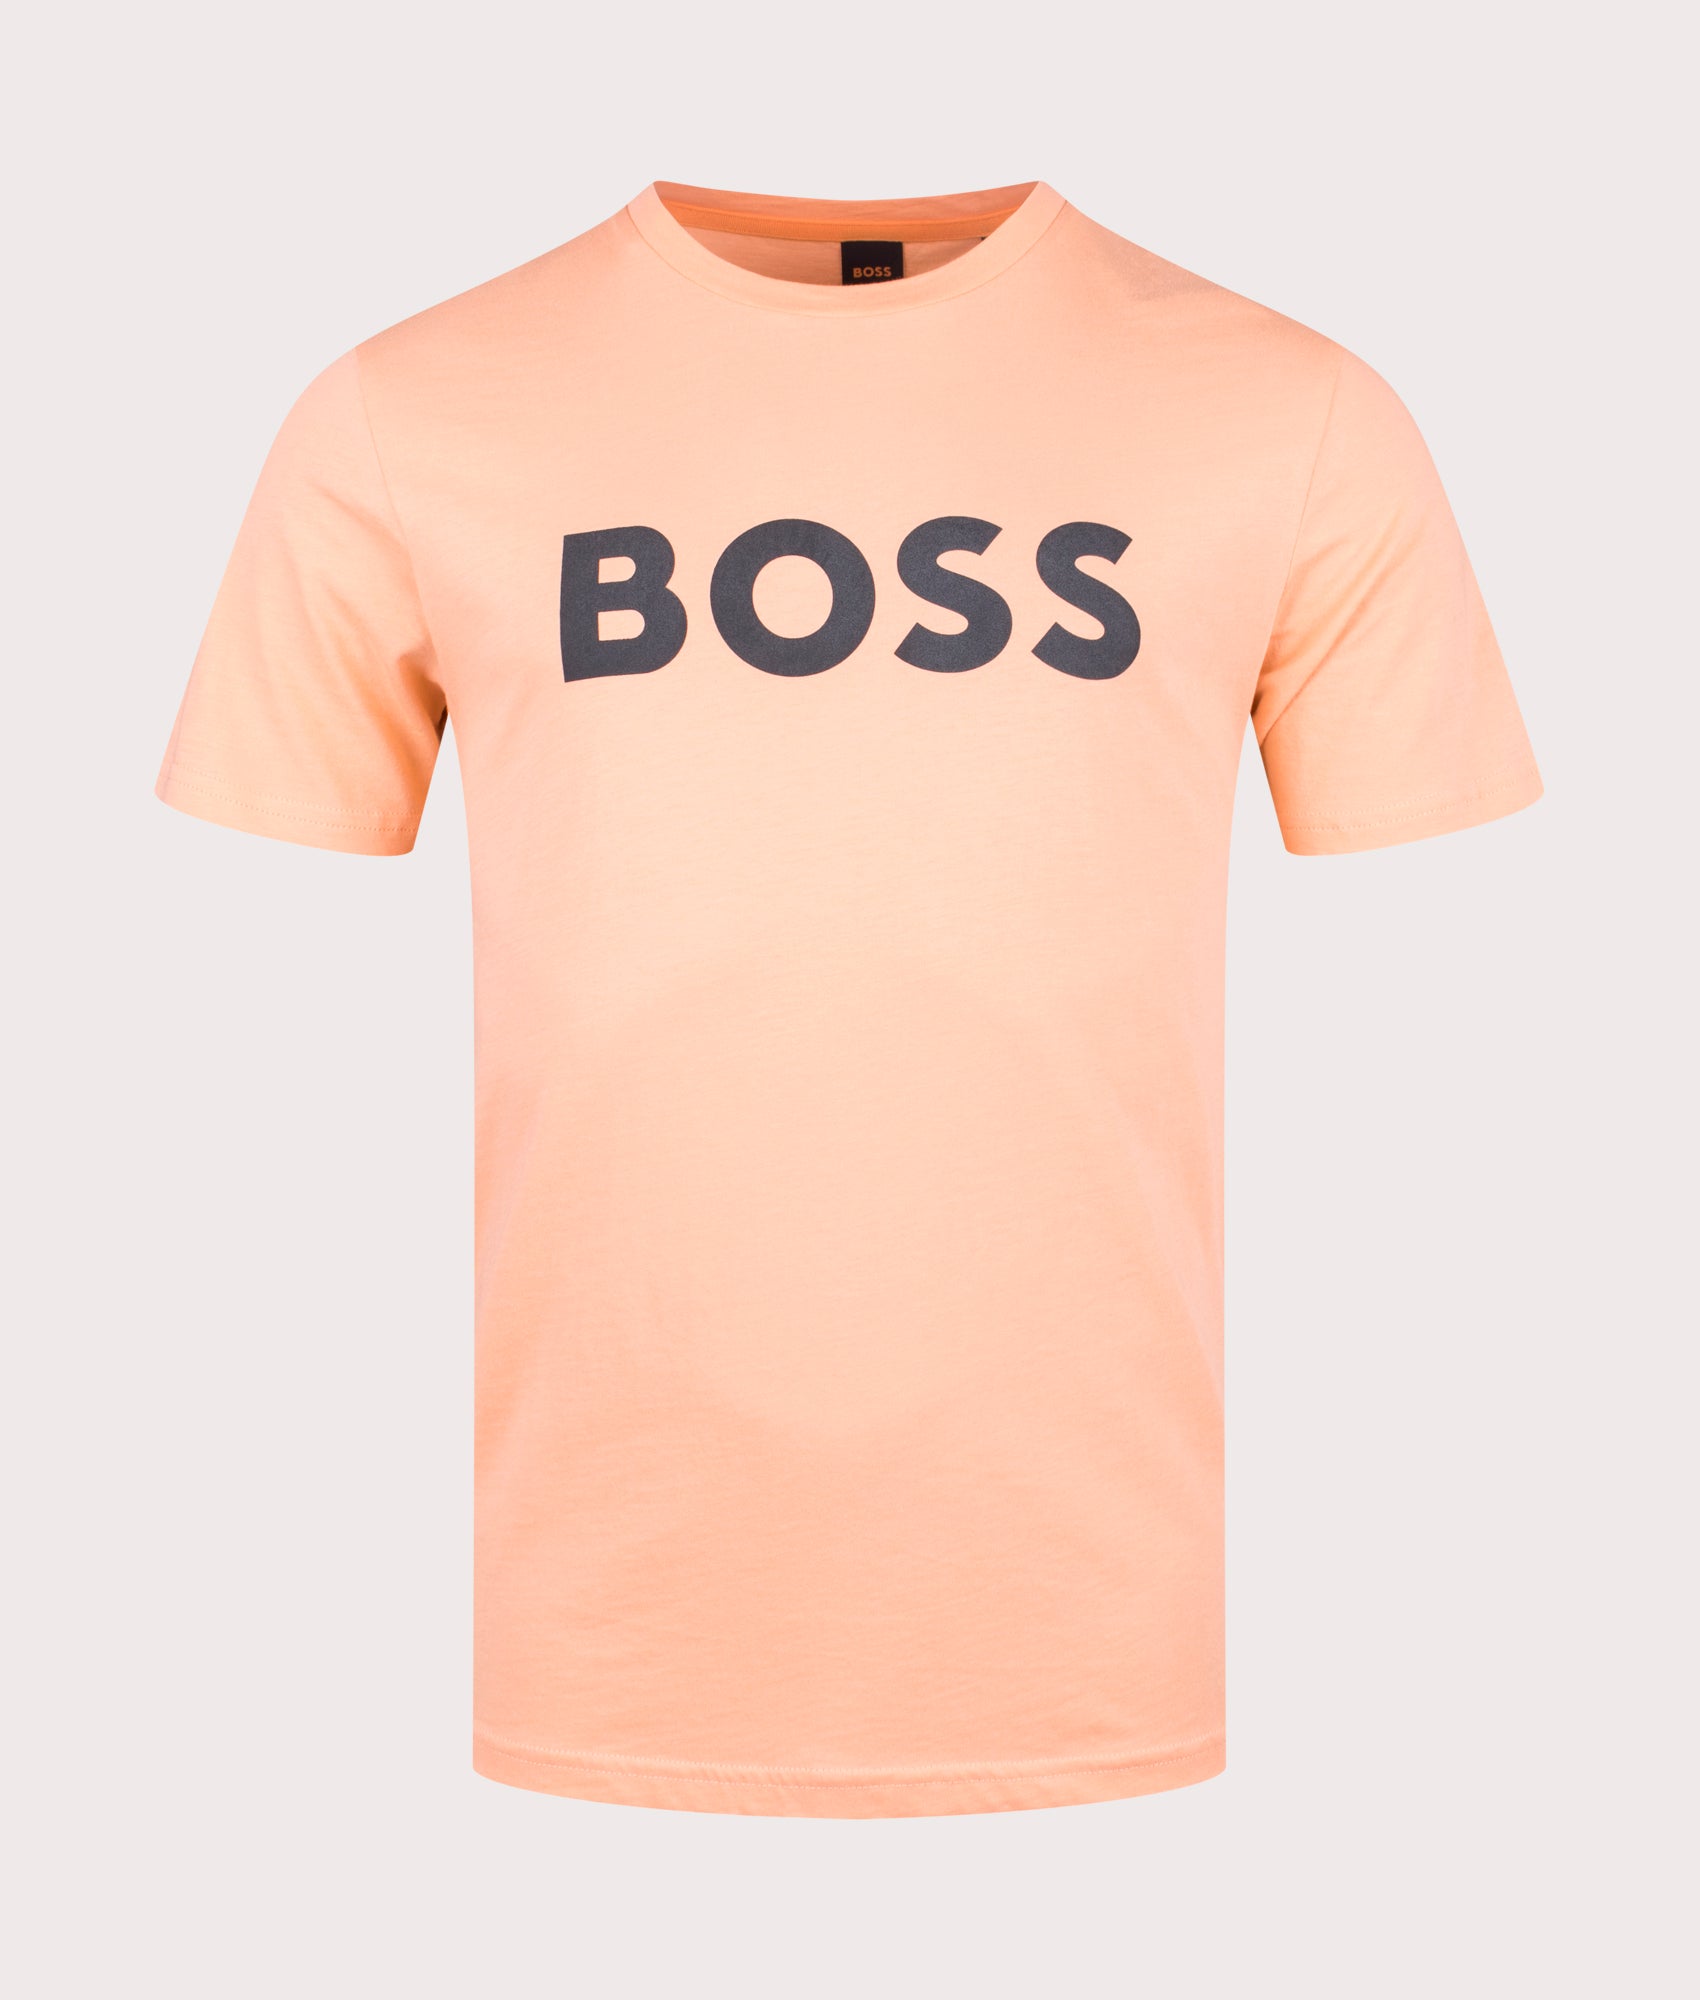 Thinking 1 Orange Light/Pastel | T-Shirt | EQVVS BOSS